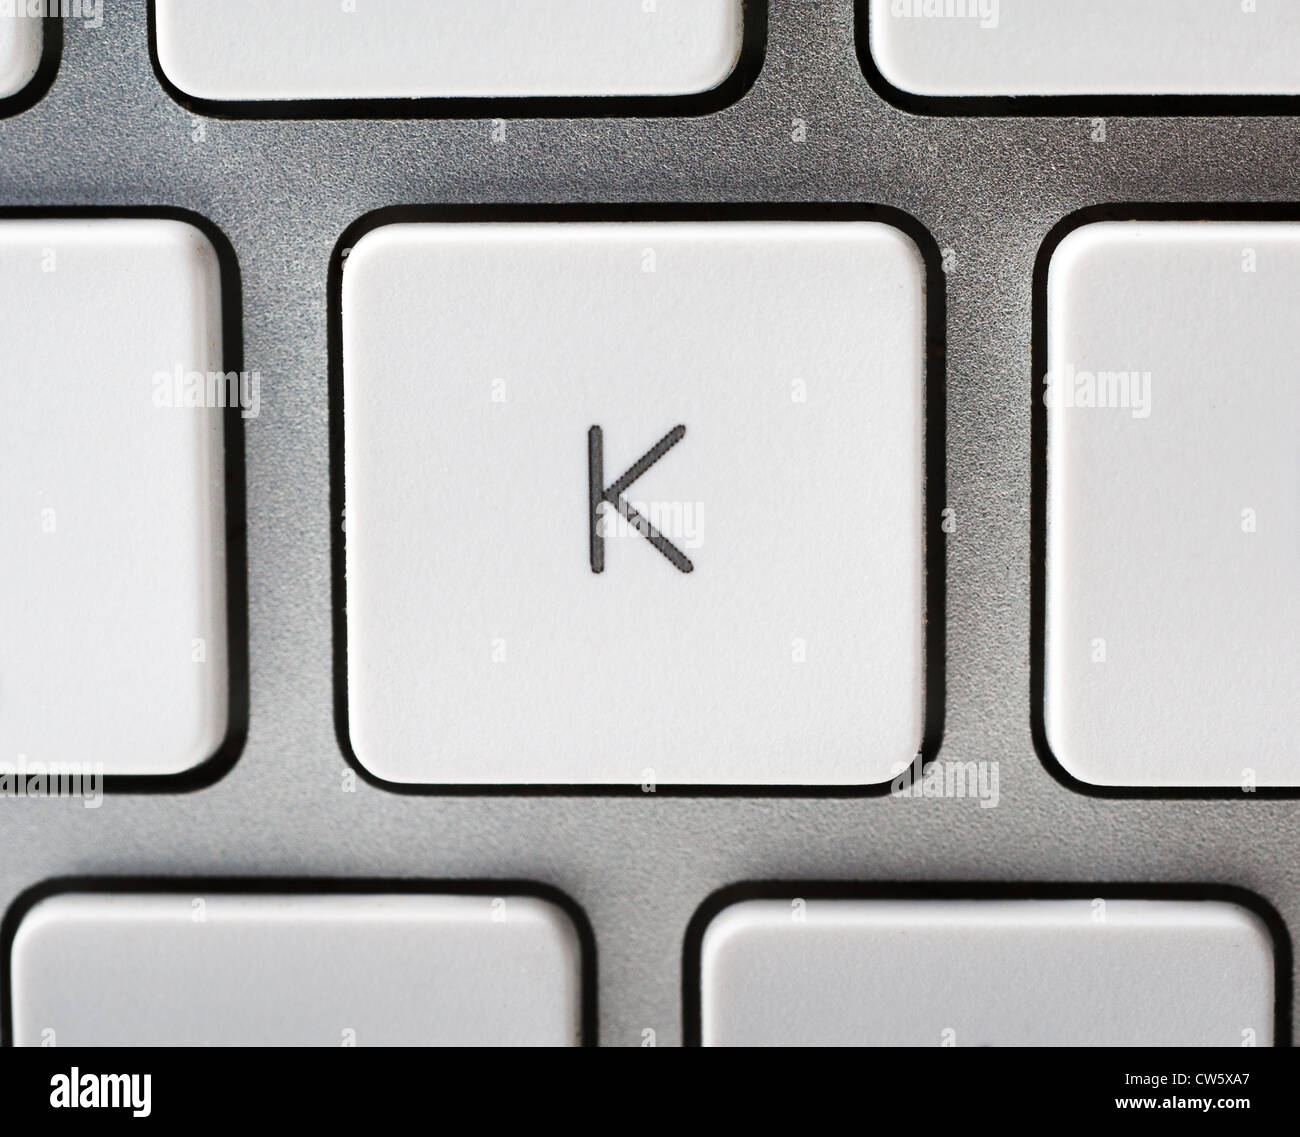 Letter K on an Apple keyboard Stock Photo